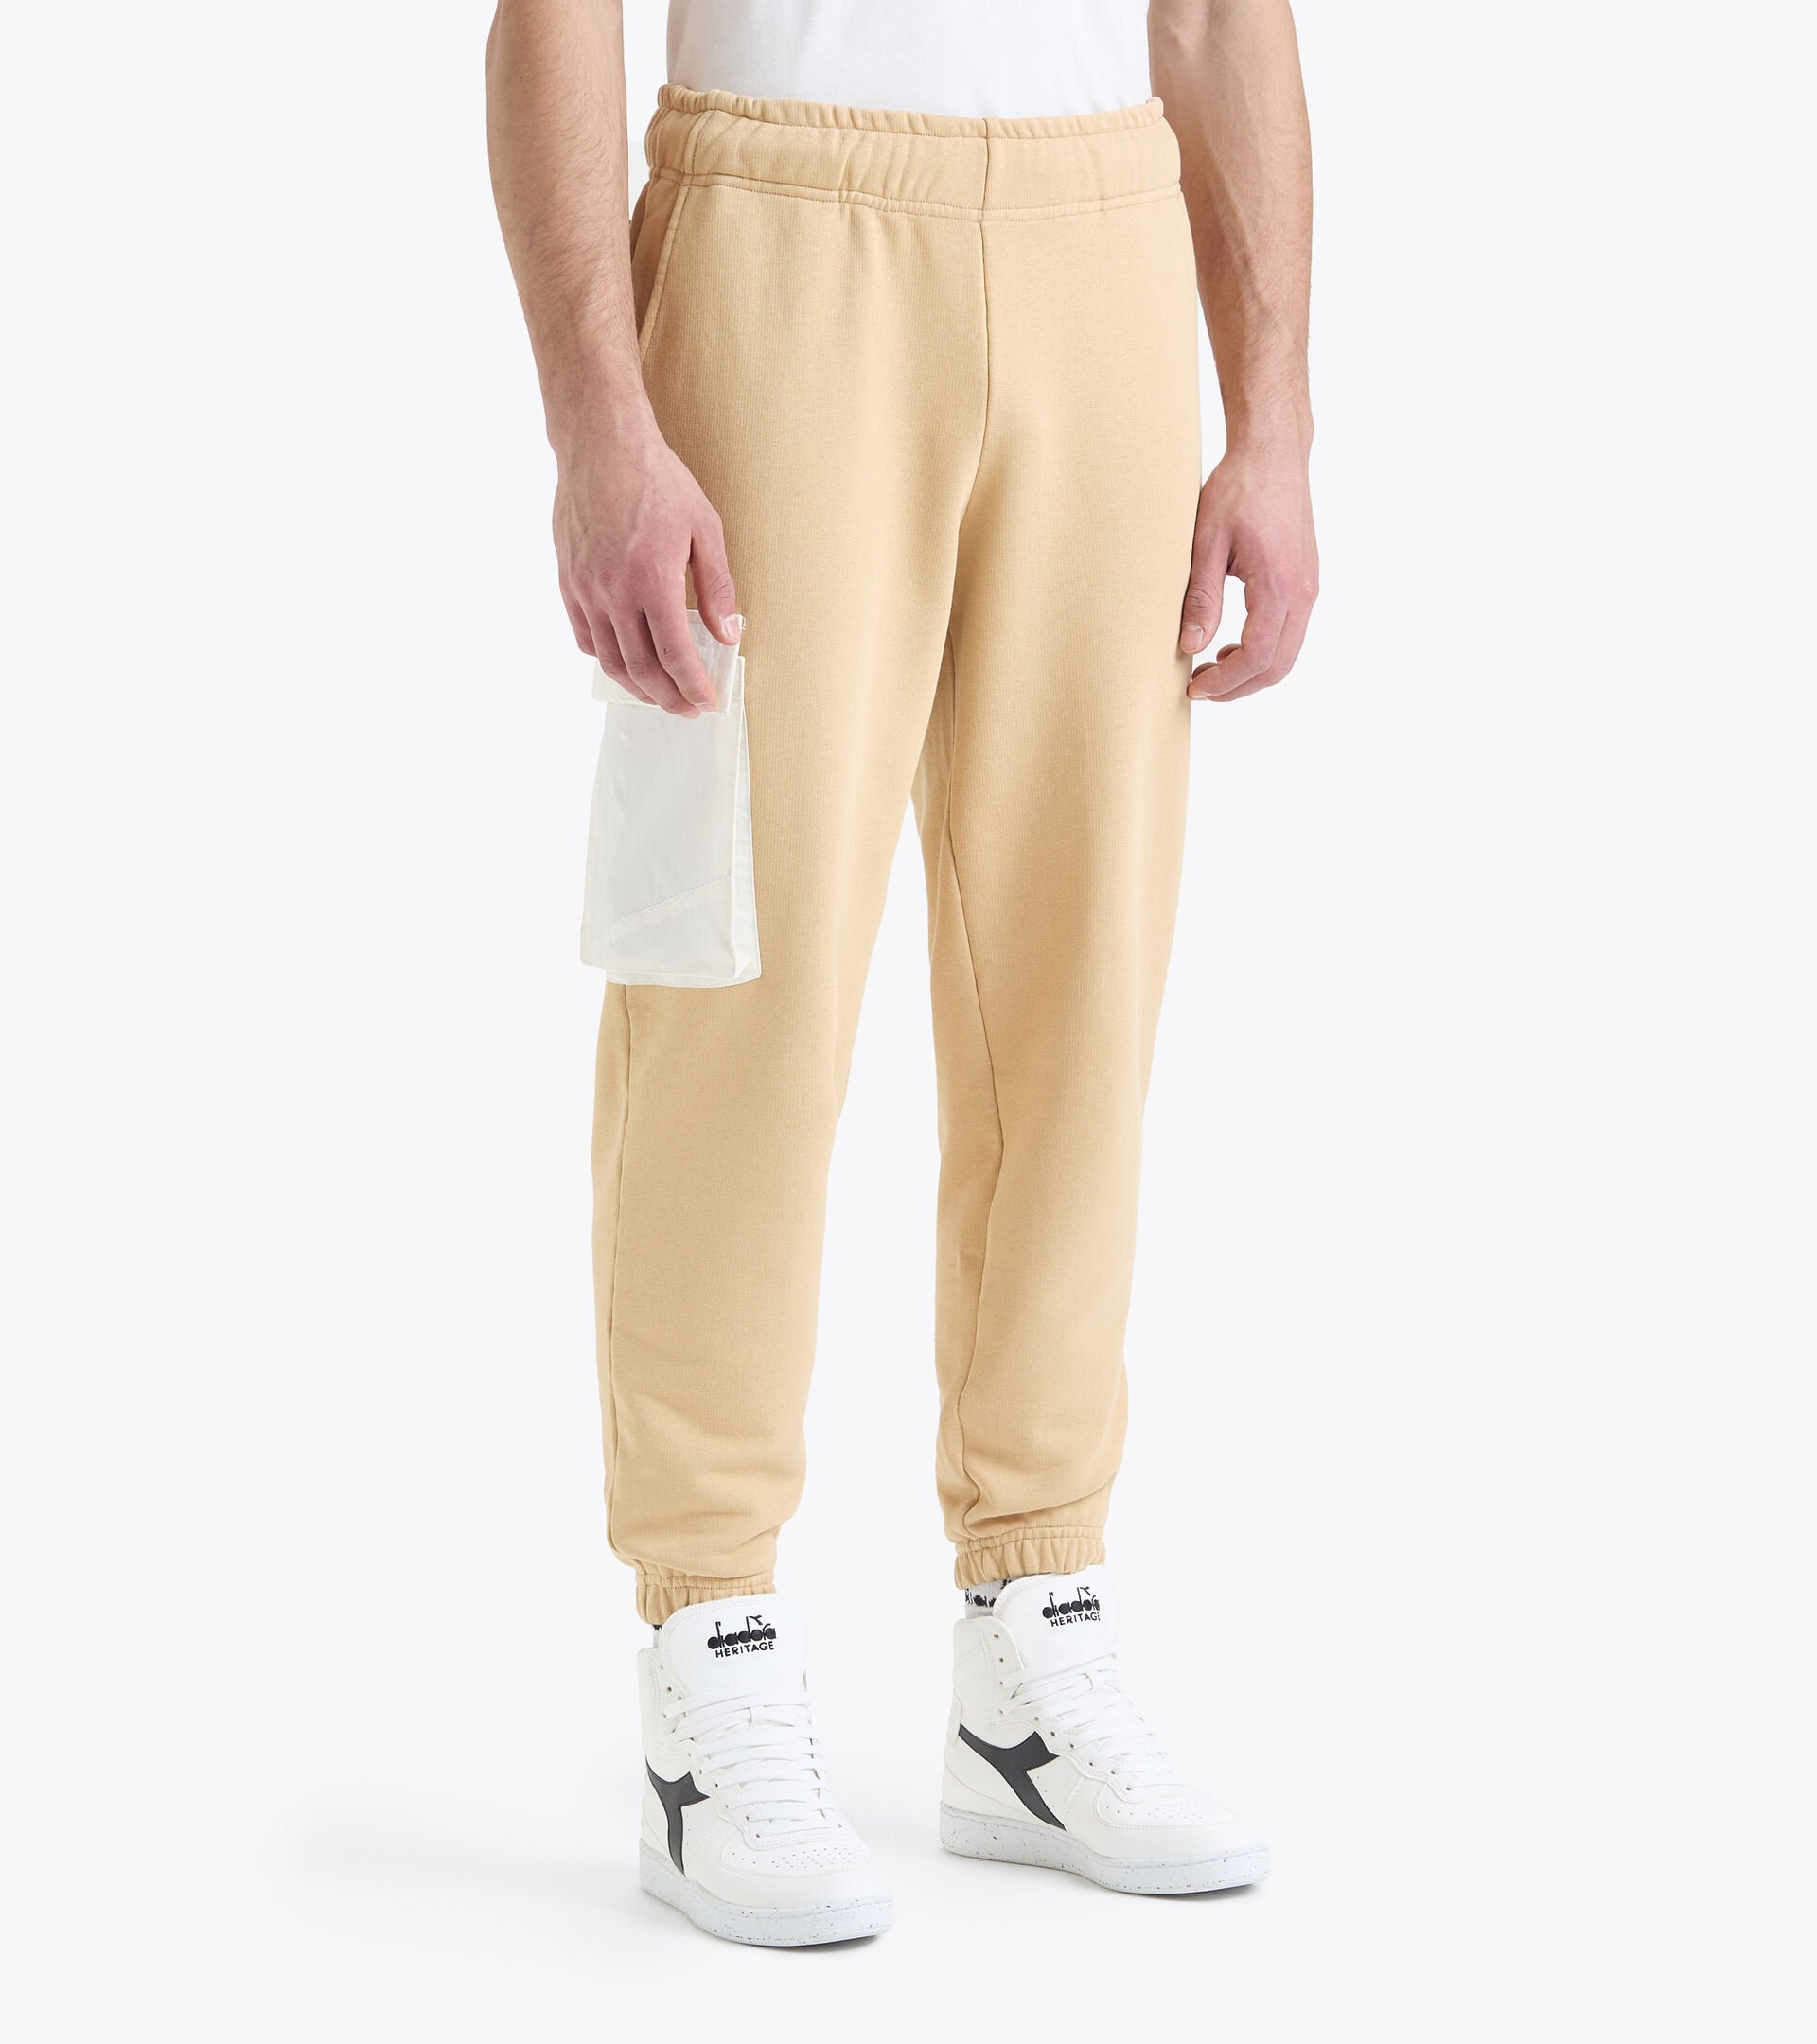 PANT 2030 Made in Italy sweatpants - Men - Diadora Online Store PL